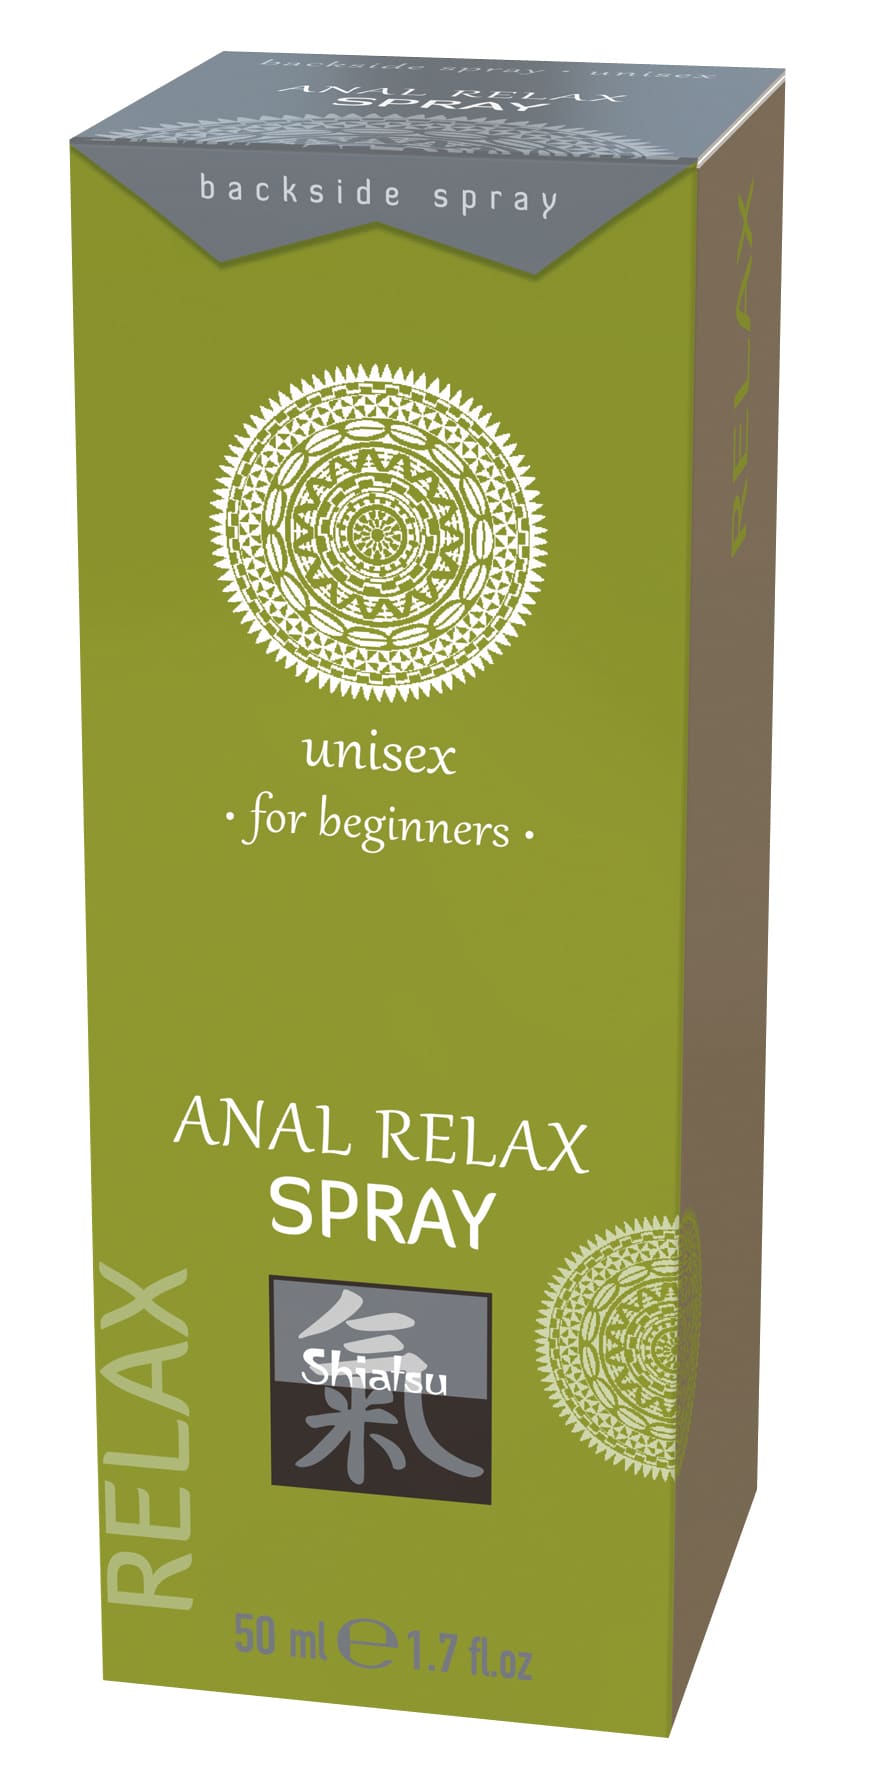 Shiatsu - Anaal Relax Spray Voor Beginners